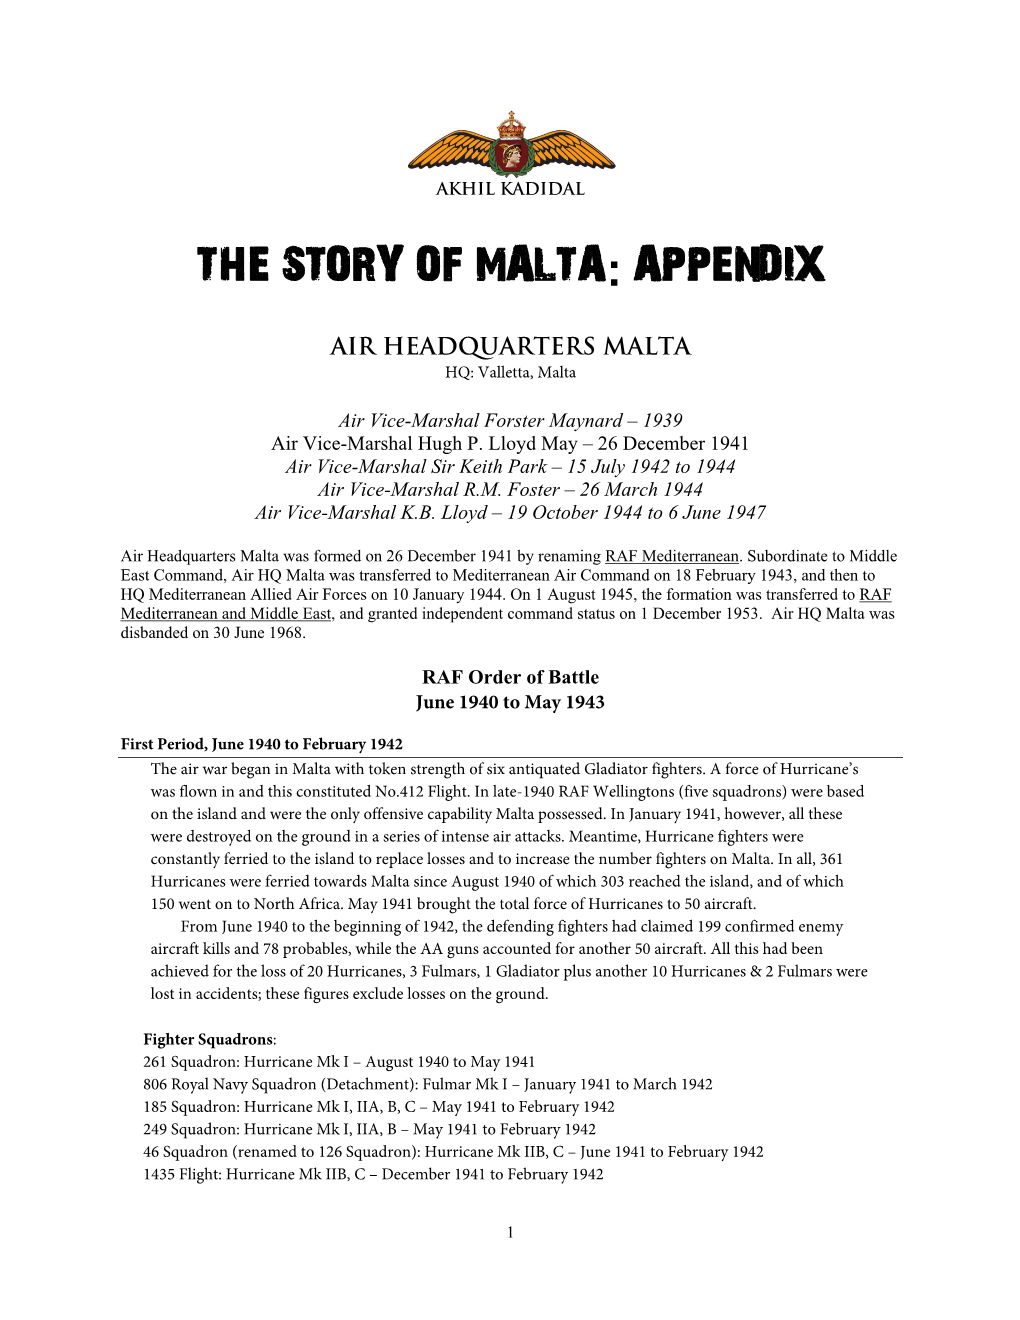 The Story of Malta: Appendix